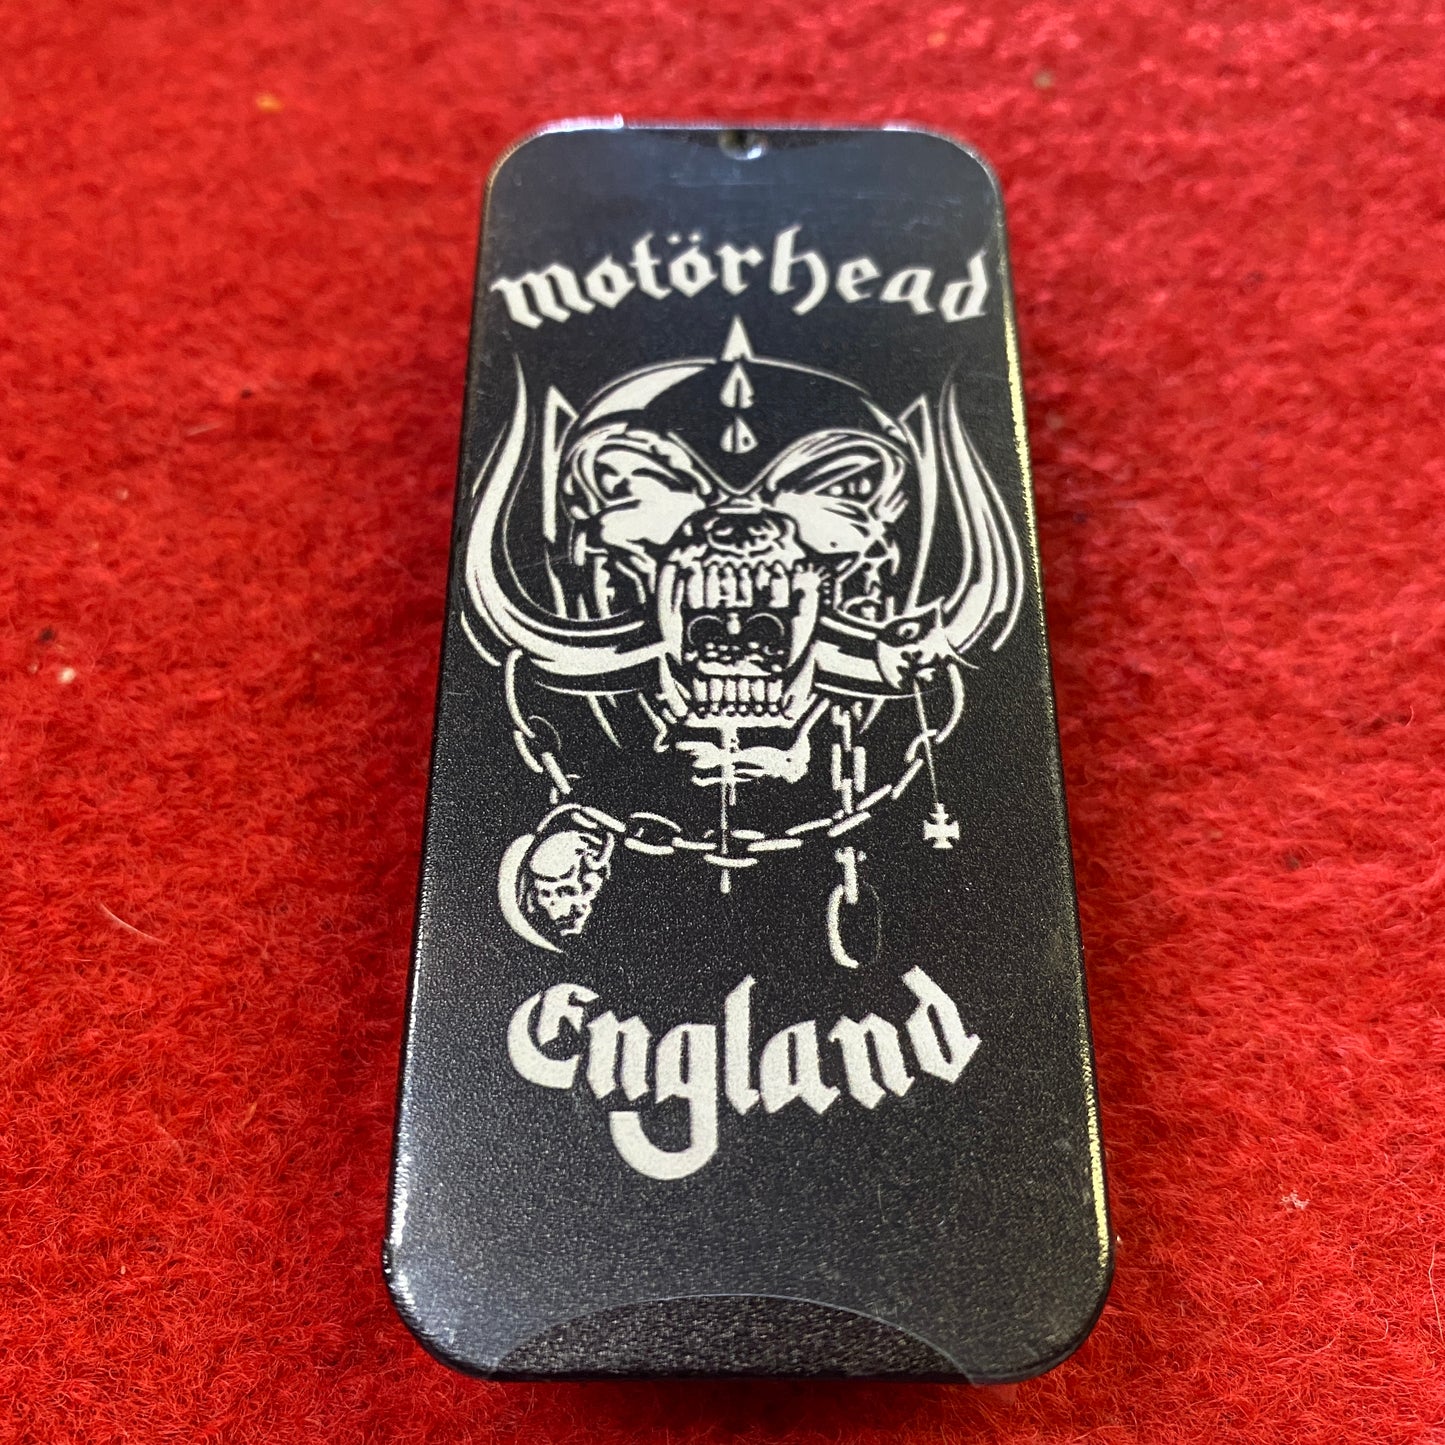 Motorhead "Warpig" Collector's Pick Tin